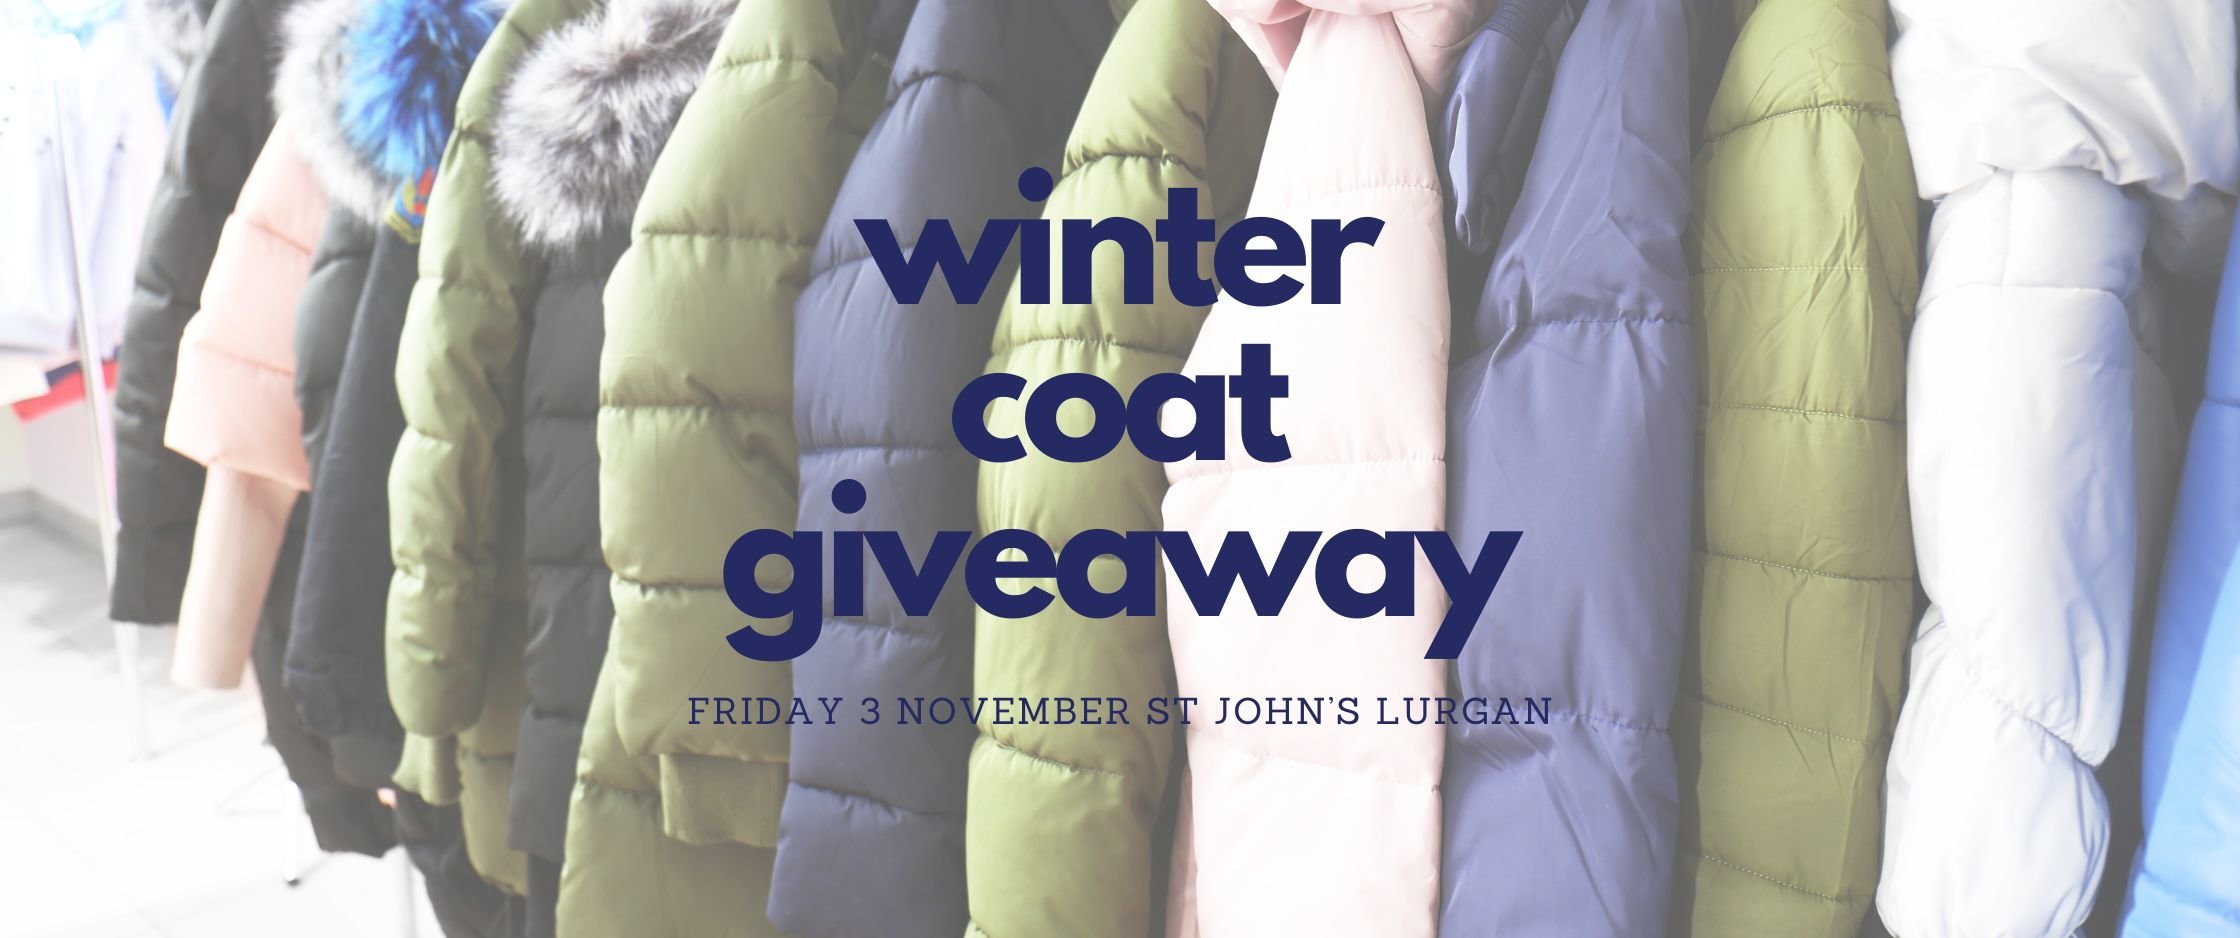 Winter coat giveaway at St John’s Lurgan